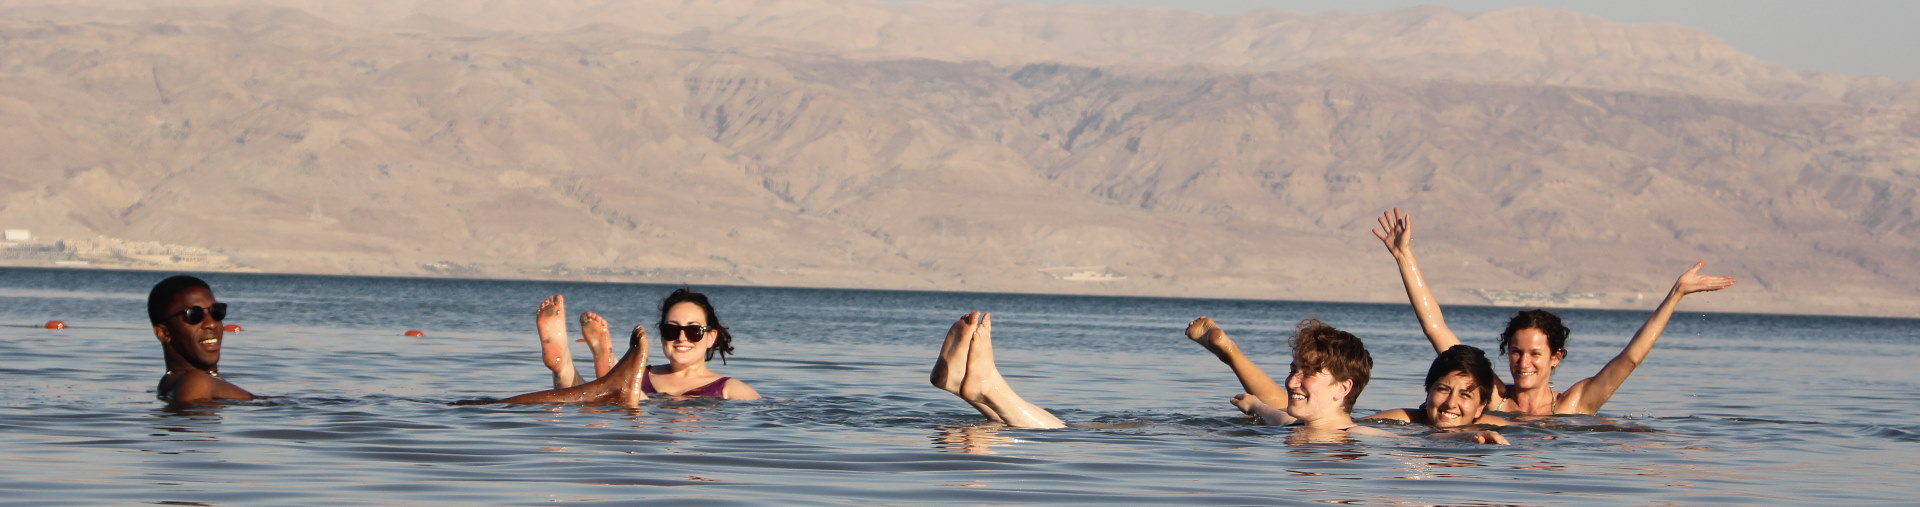 Float in the Dead Sea tour from jerusalem